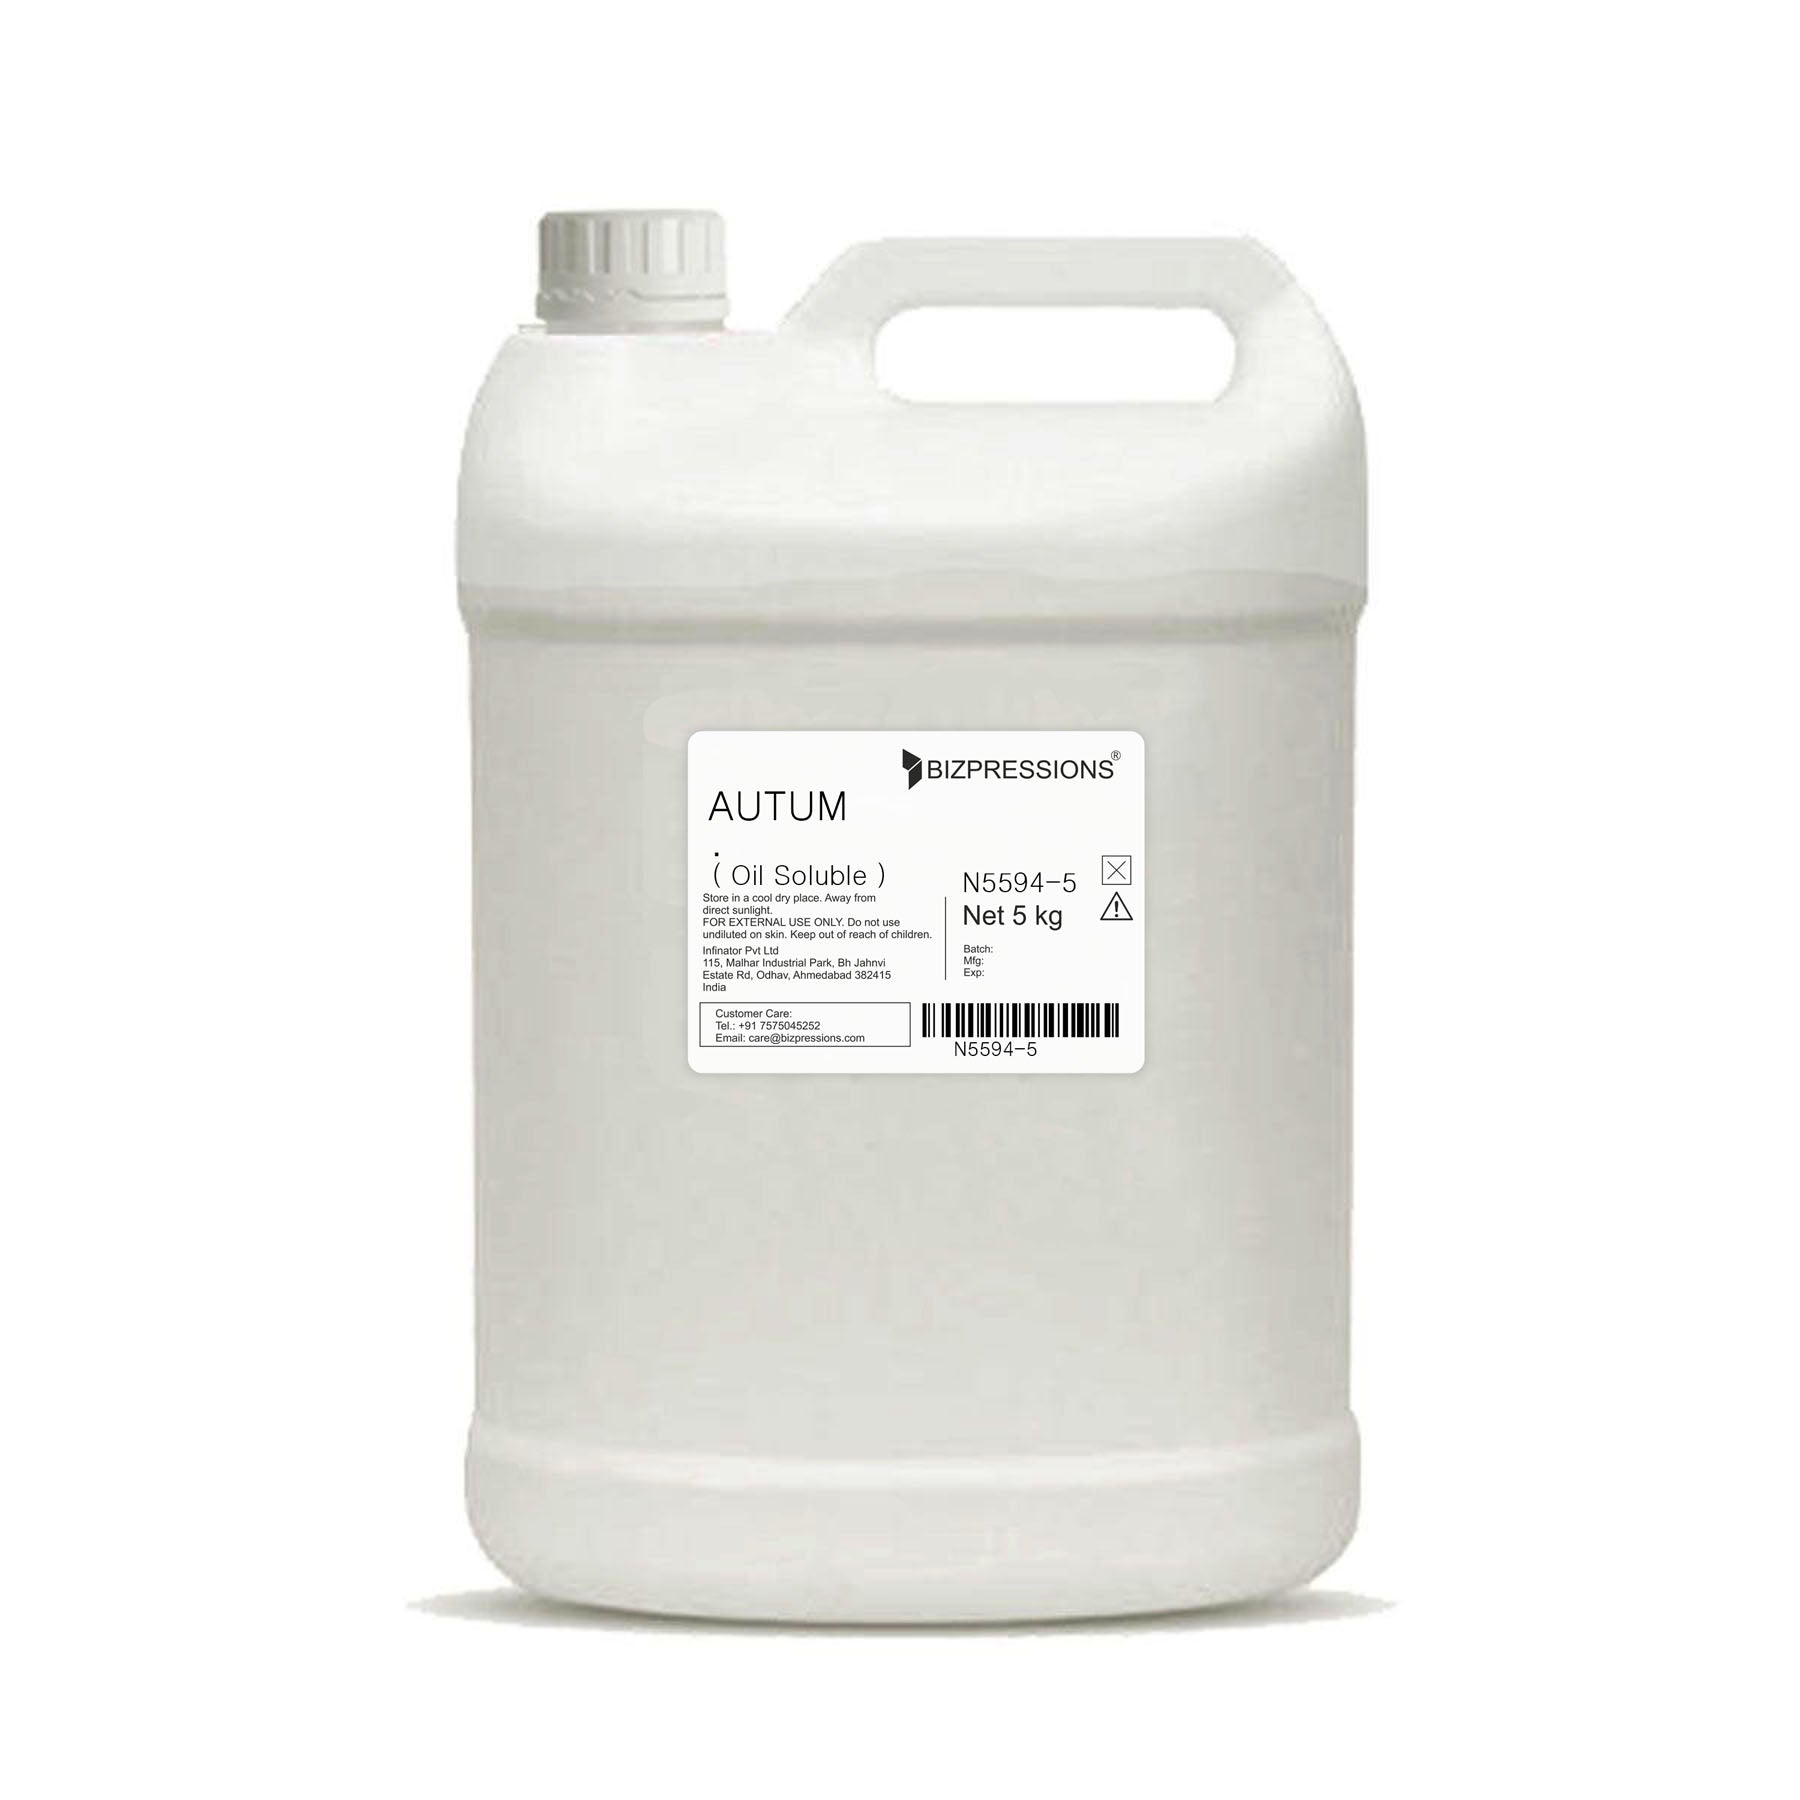 AUTUM - Fragrance ( Oil Soluble ) - 5 kg